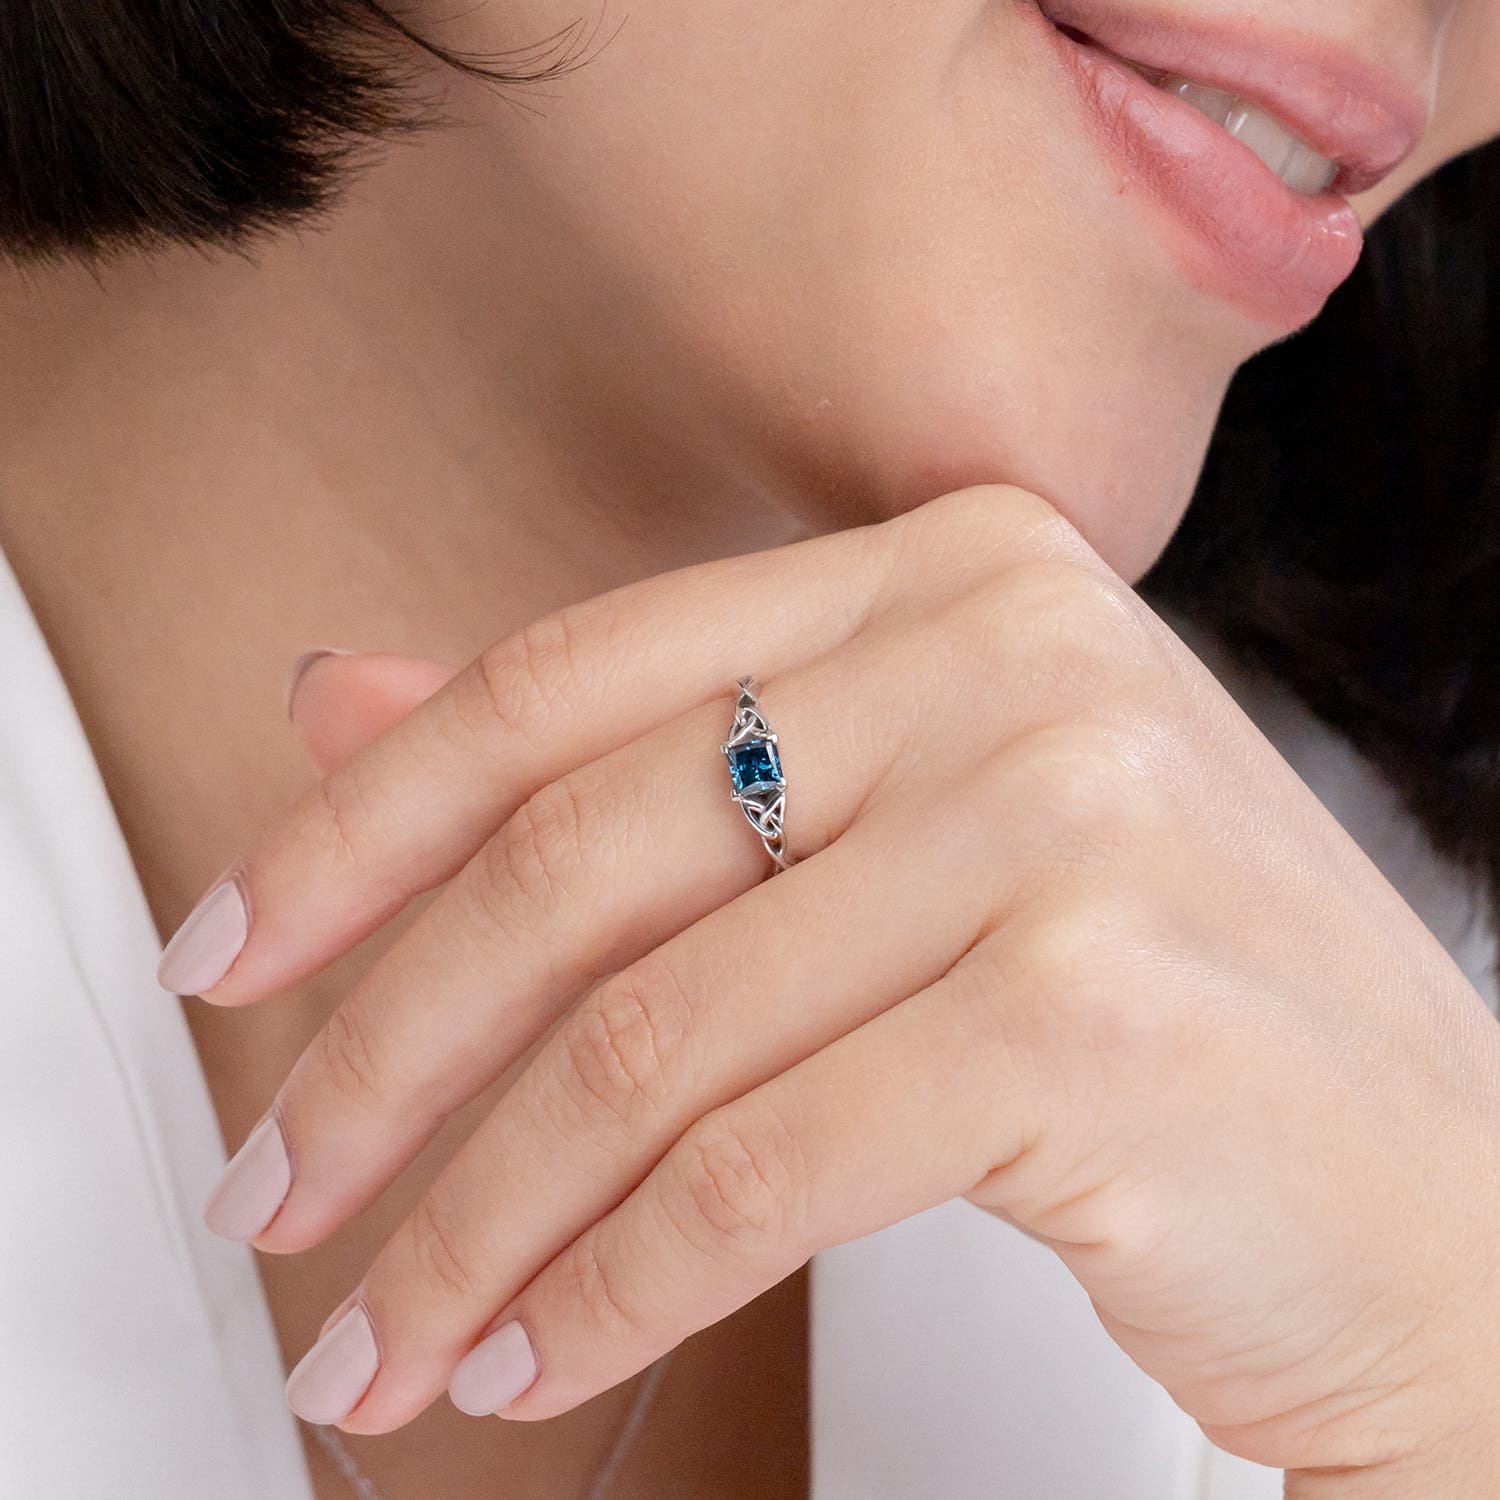 One Carat Oval Blue Diamond Ring | Barkev's